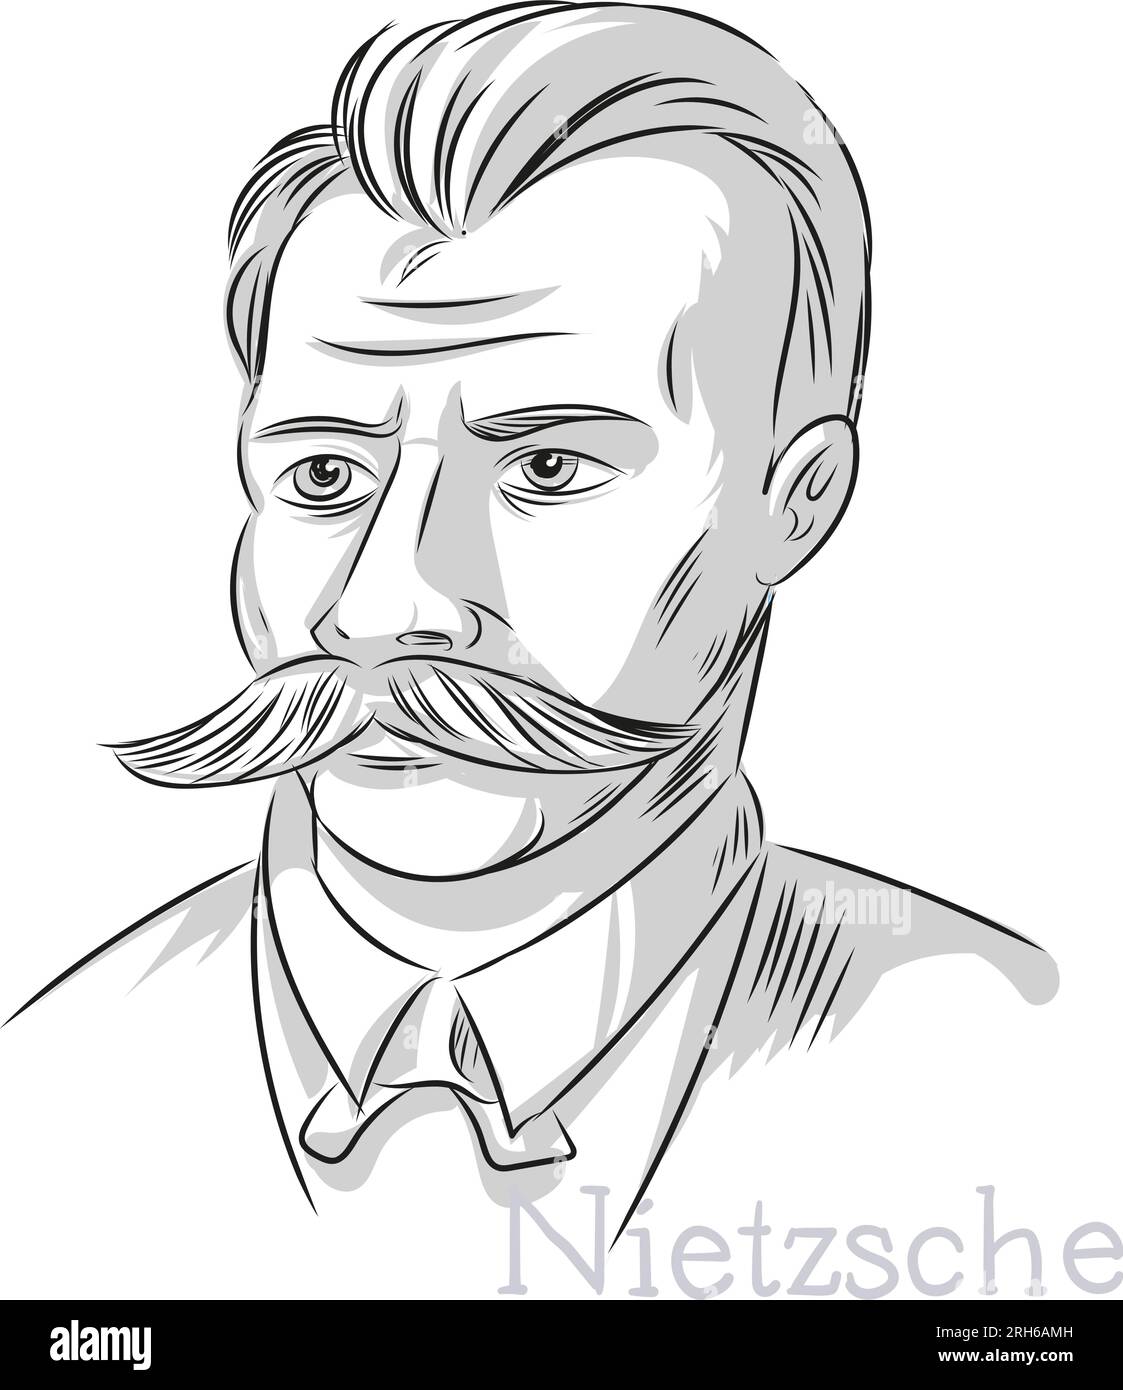 Nietzsche Philosopher Hand drawn line art Portrait Illustration Stock Vector